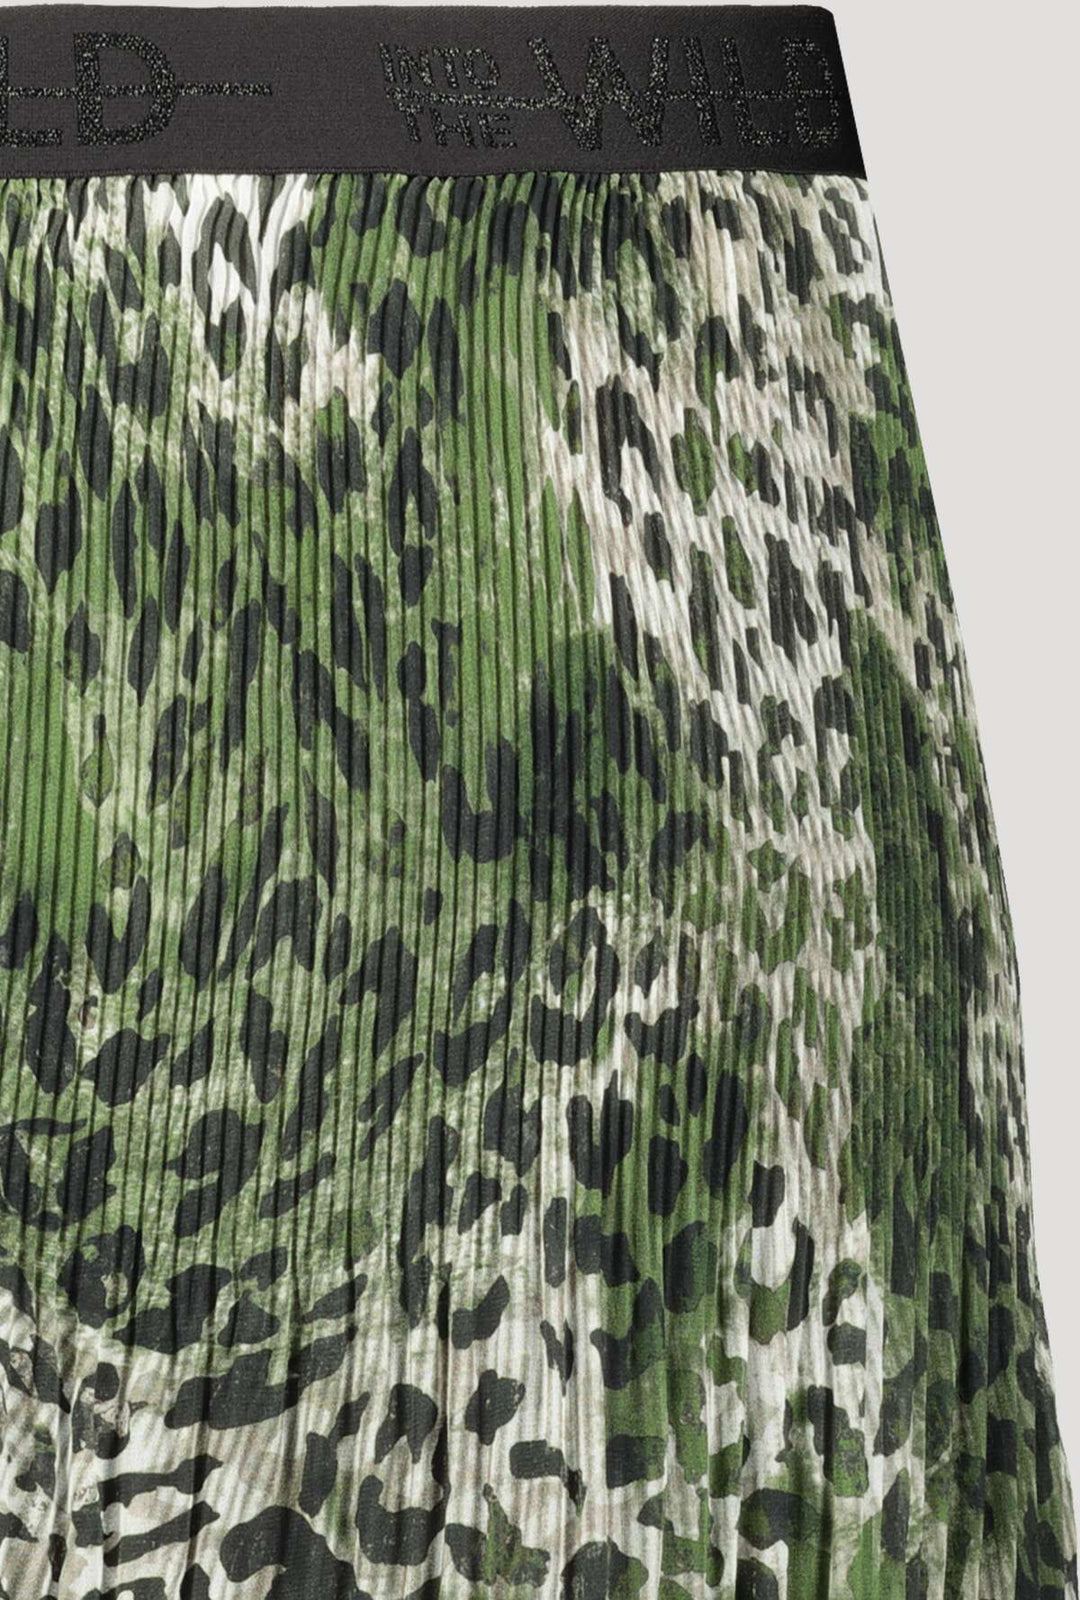 Monari 406265 Clover Pattern Skirt Detail | Dotique